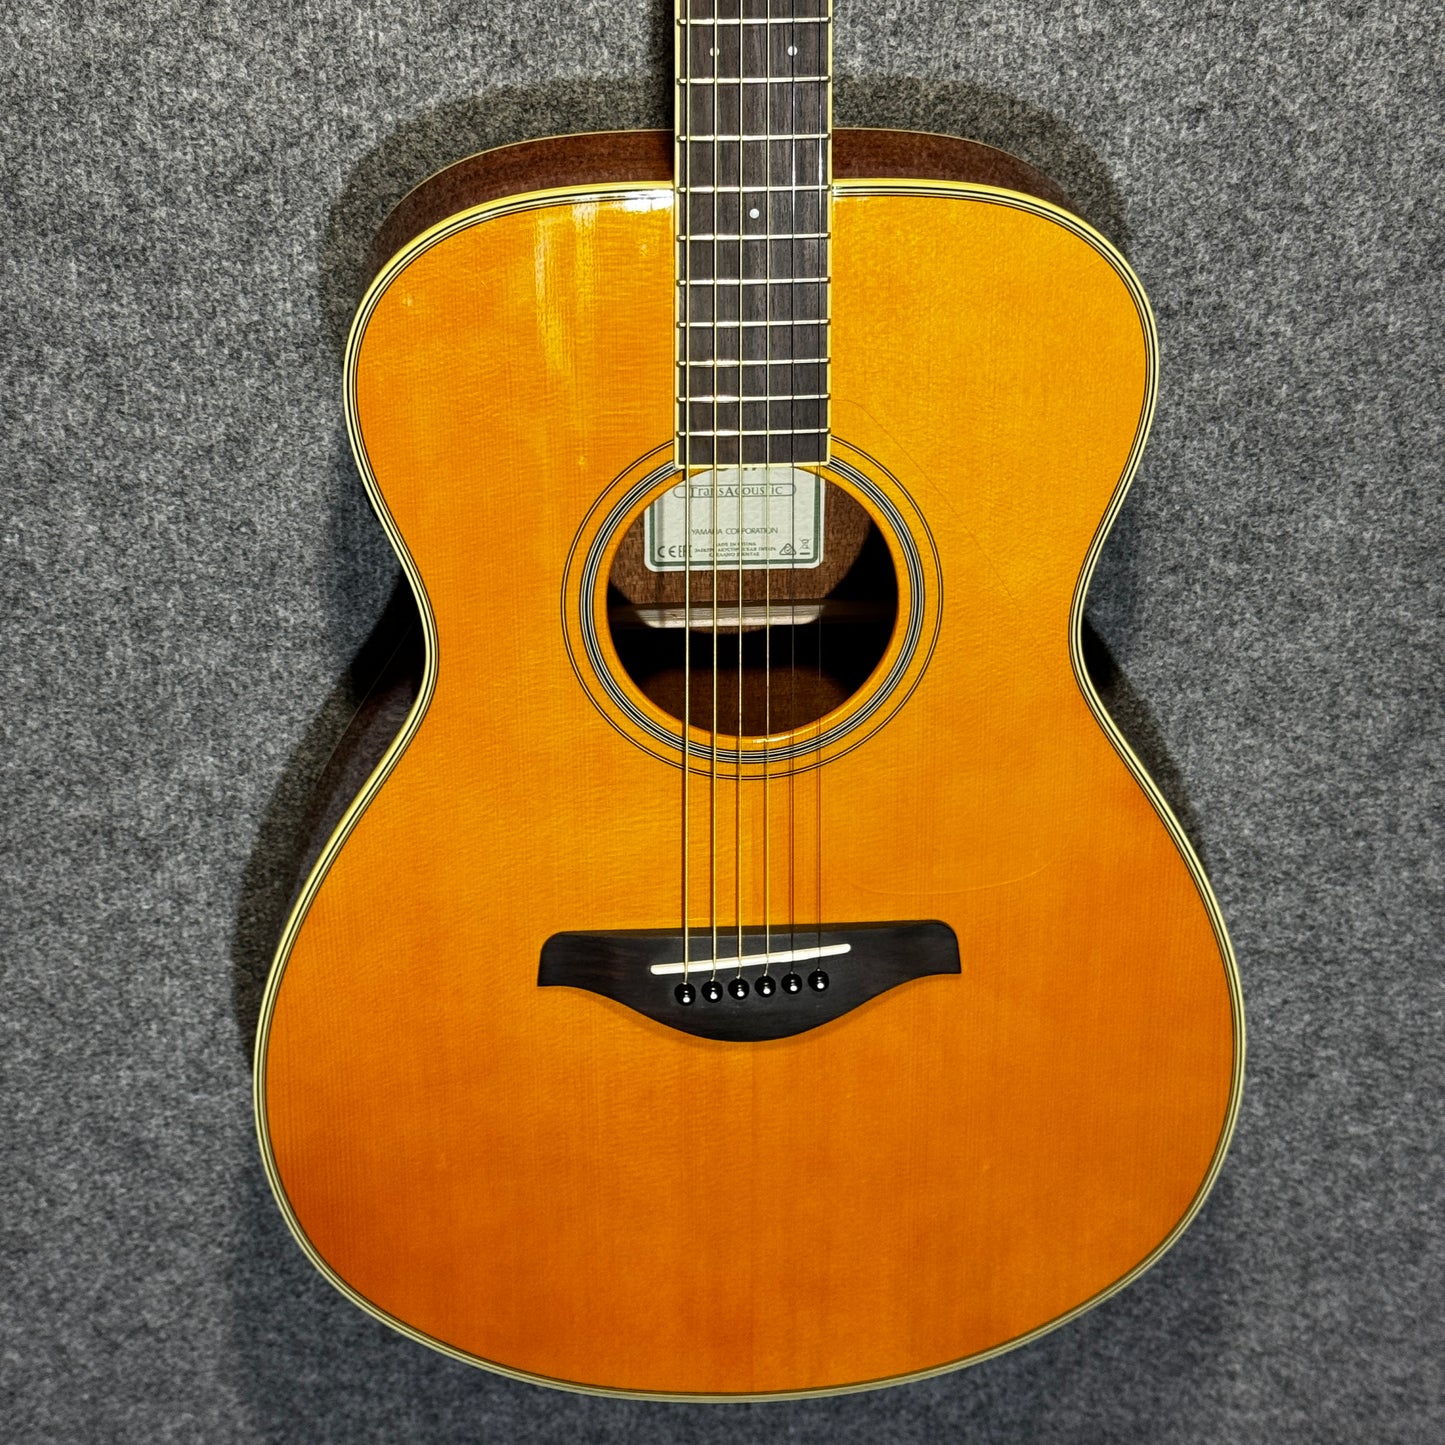 Yamaha TransAcoustic Folk Guitar with Built in Acoustic Reverb & Chorus